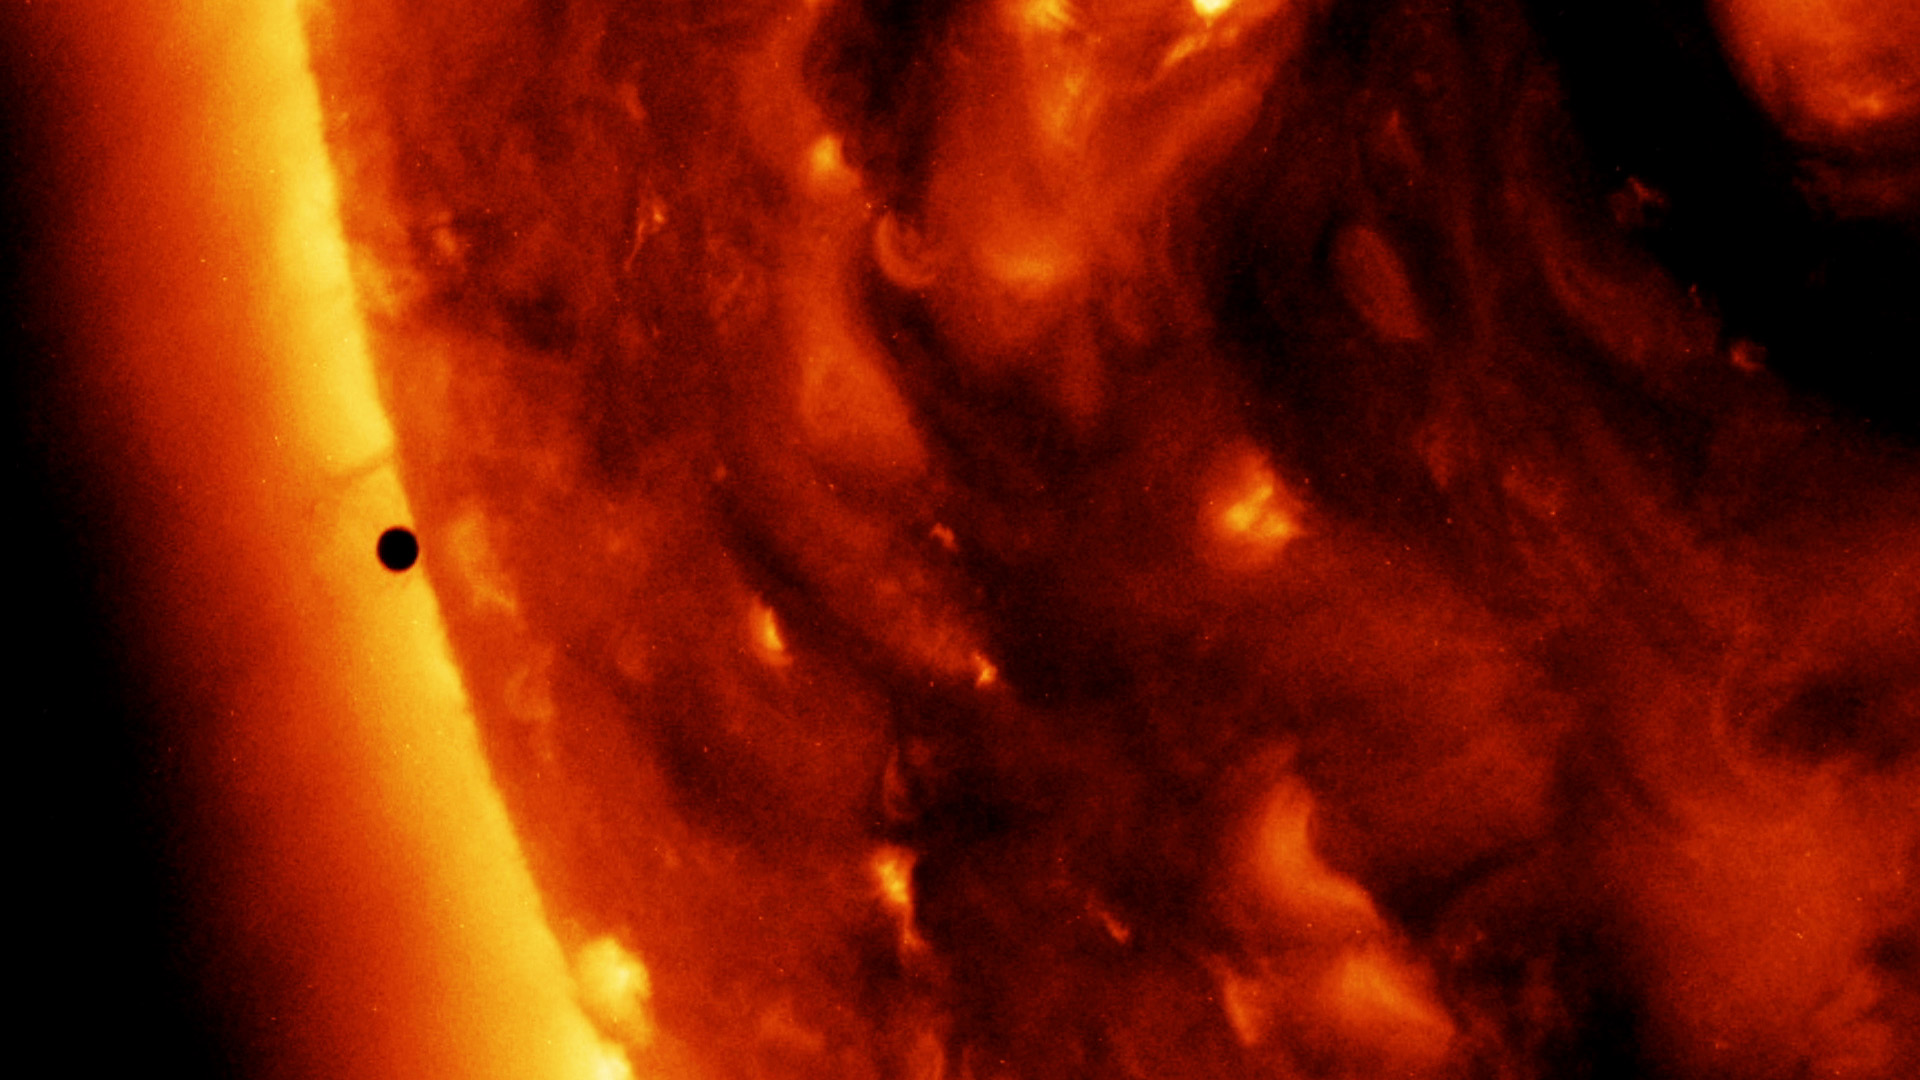 Mercury transiting the Sun, seen by SDO